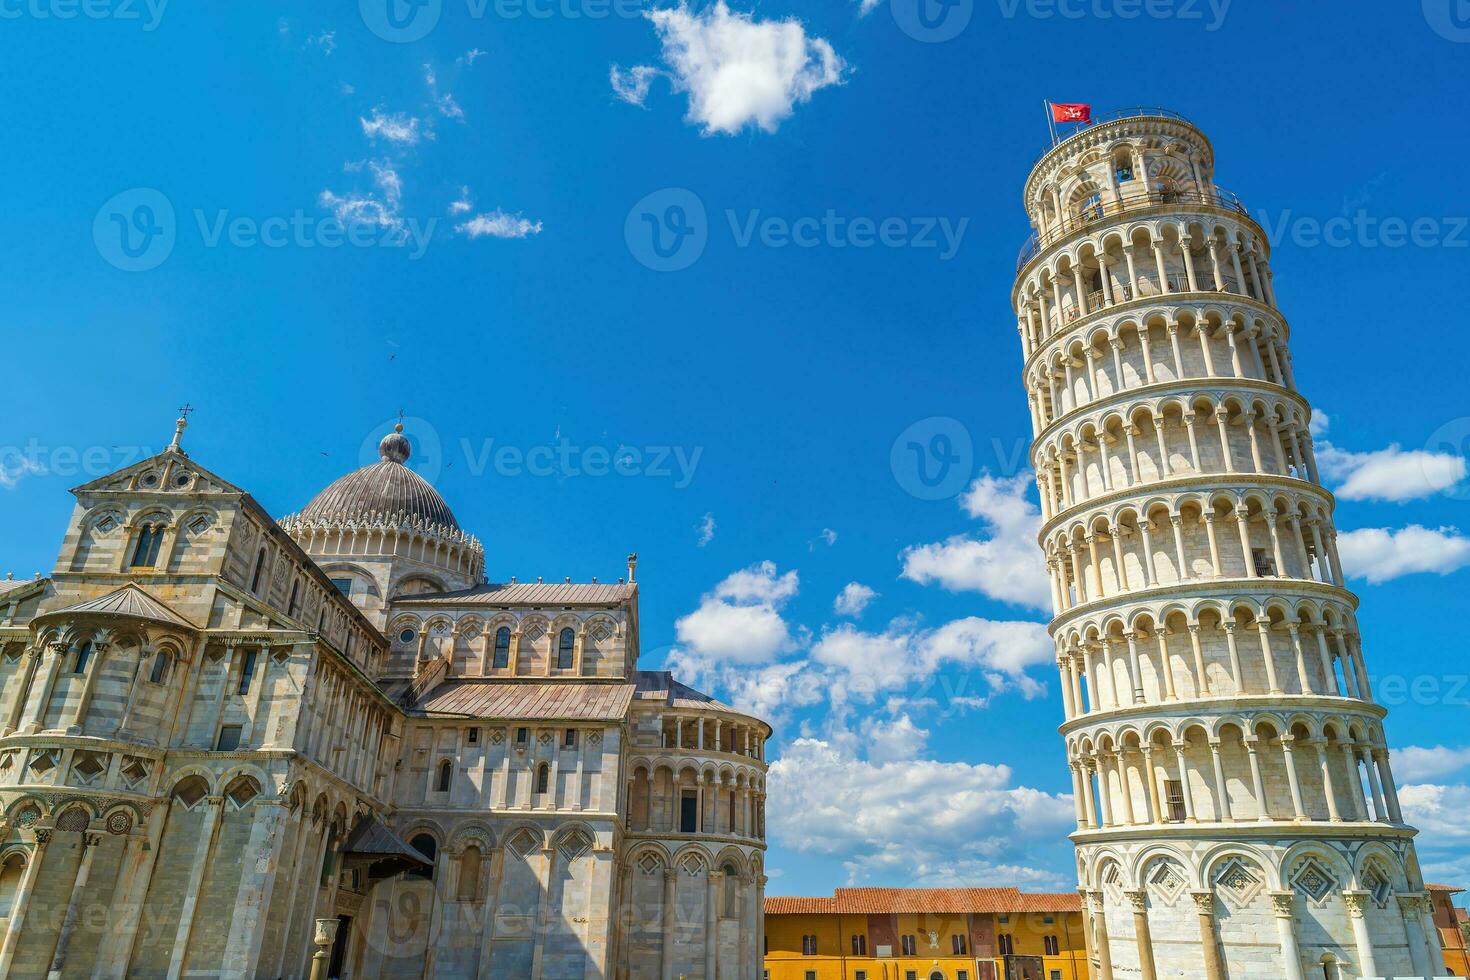 de känd lutande torn i pisa, Italien foto